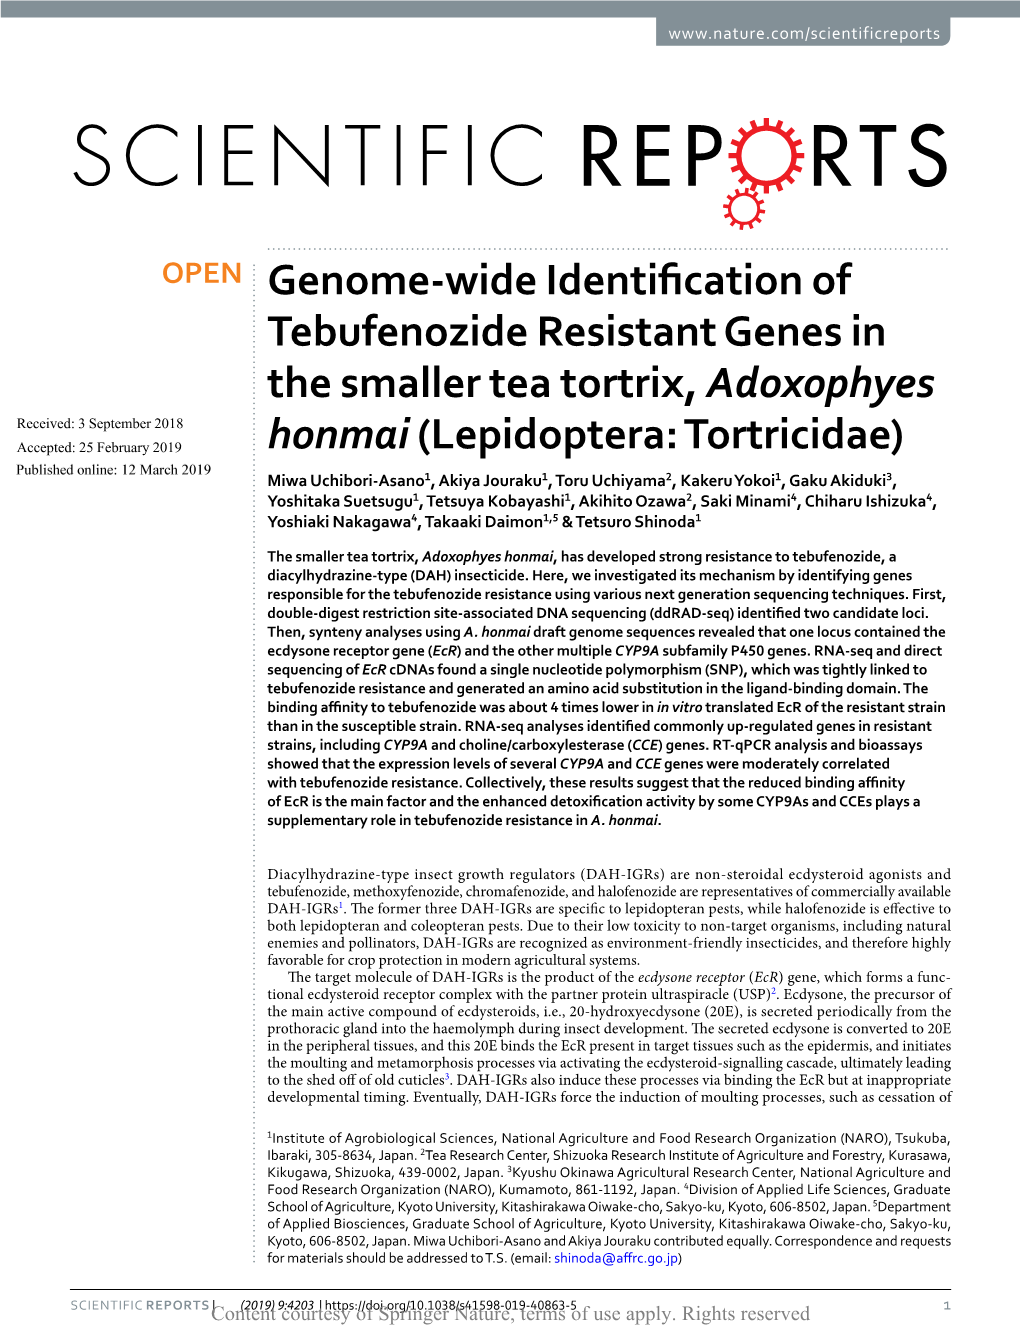 Genome-Wide Identification of Tebufenozide Resistant Genes in the Smaller Tea Tortrix, Adoxophyes Honmai(Lepidoptera: Tortricida